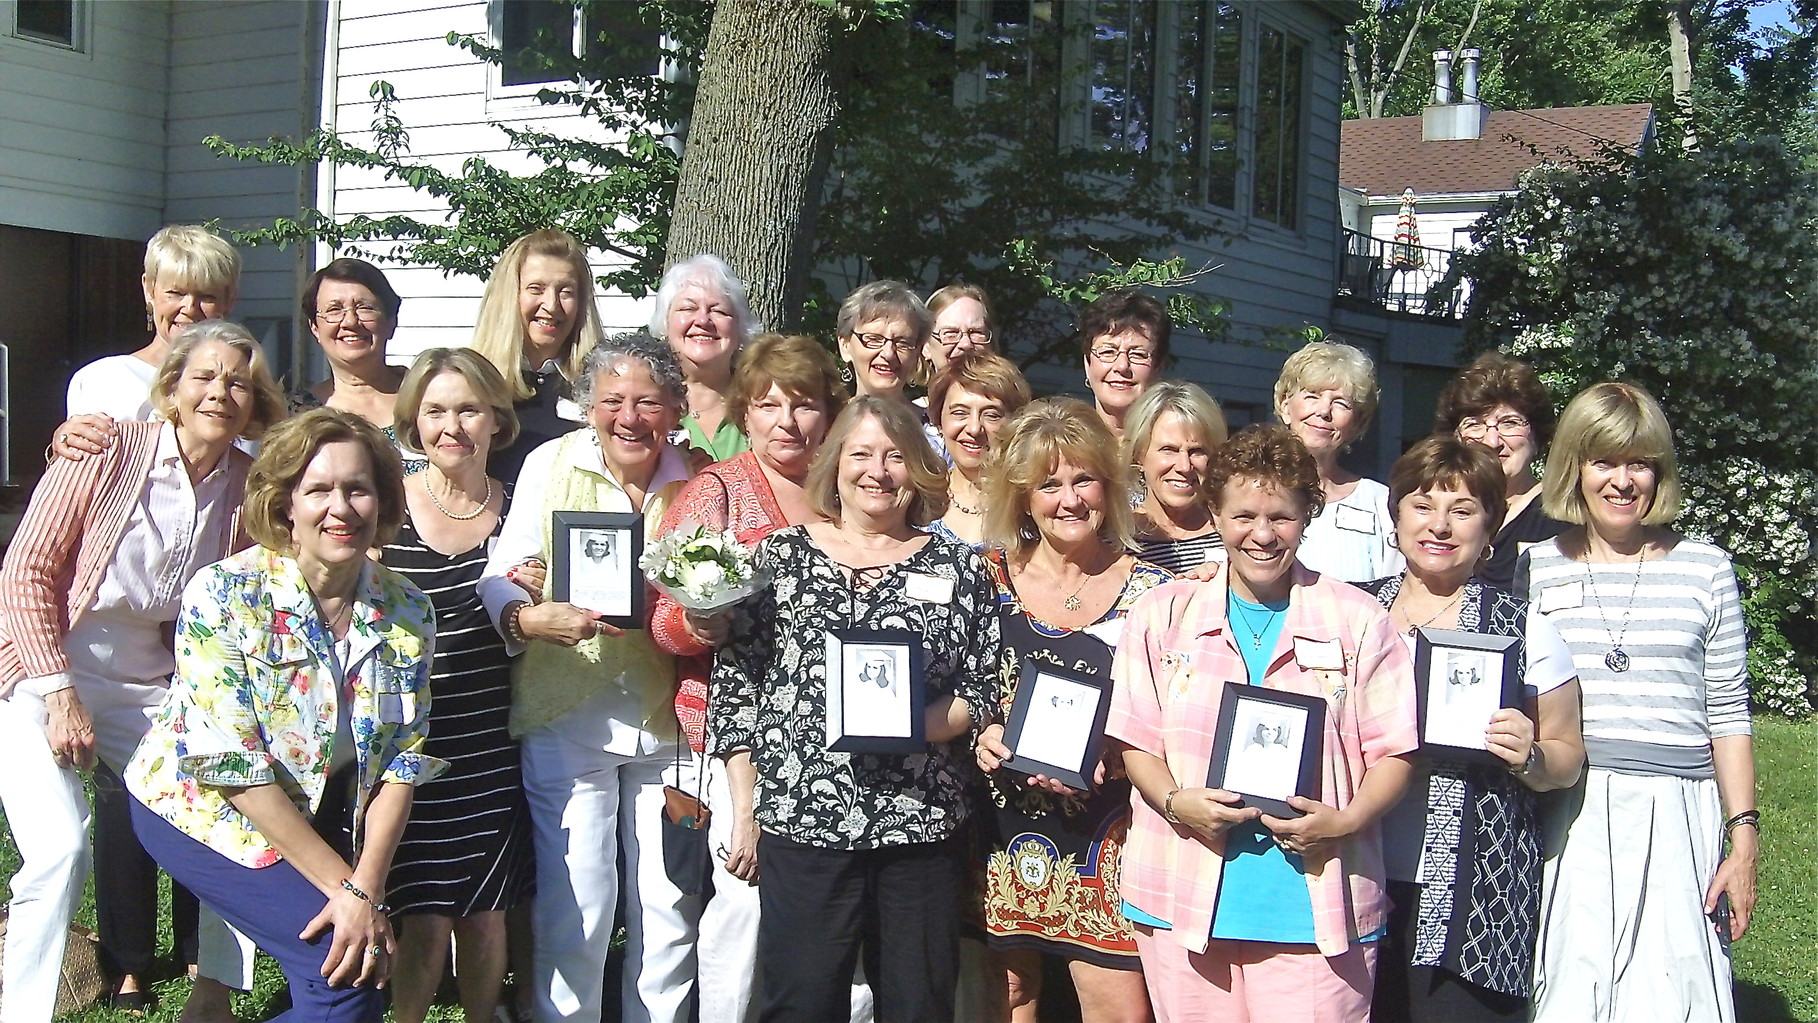 The Convent School High School Reunion, June 20-22, 2014